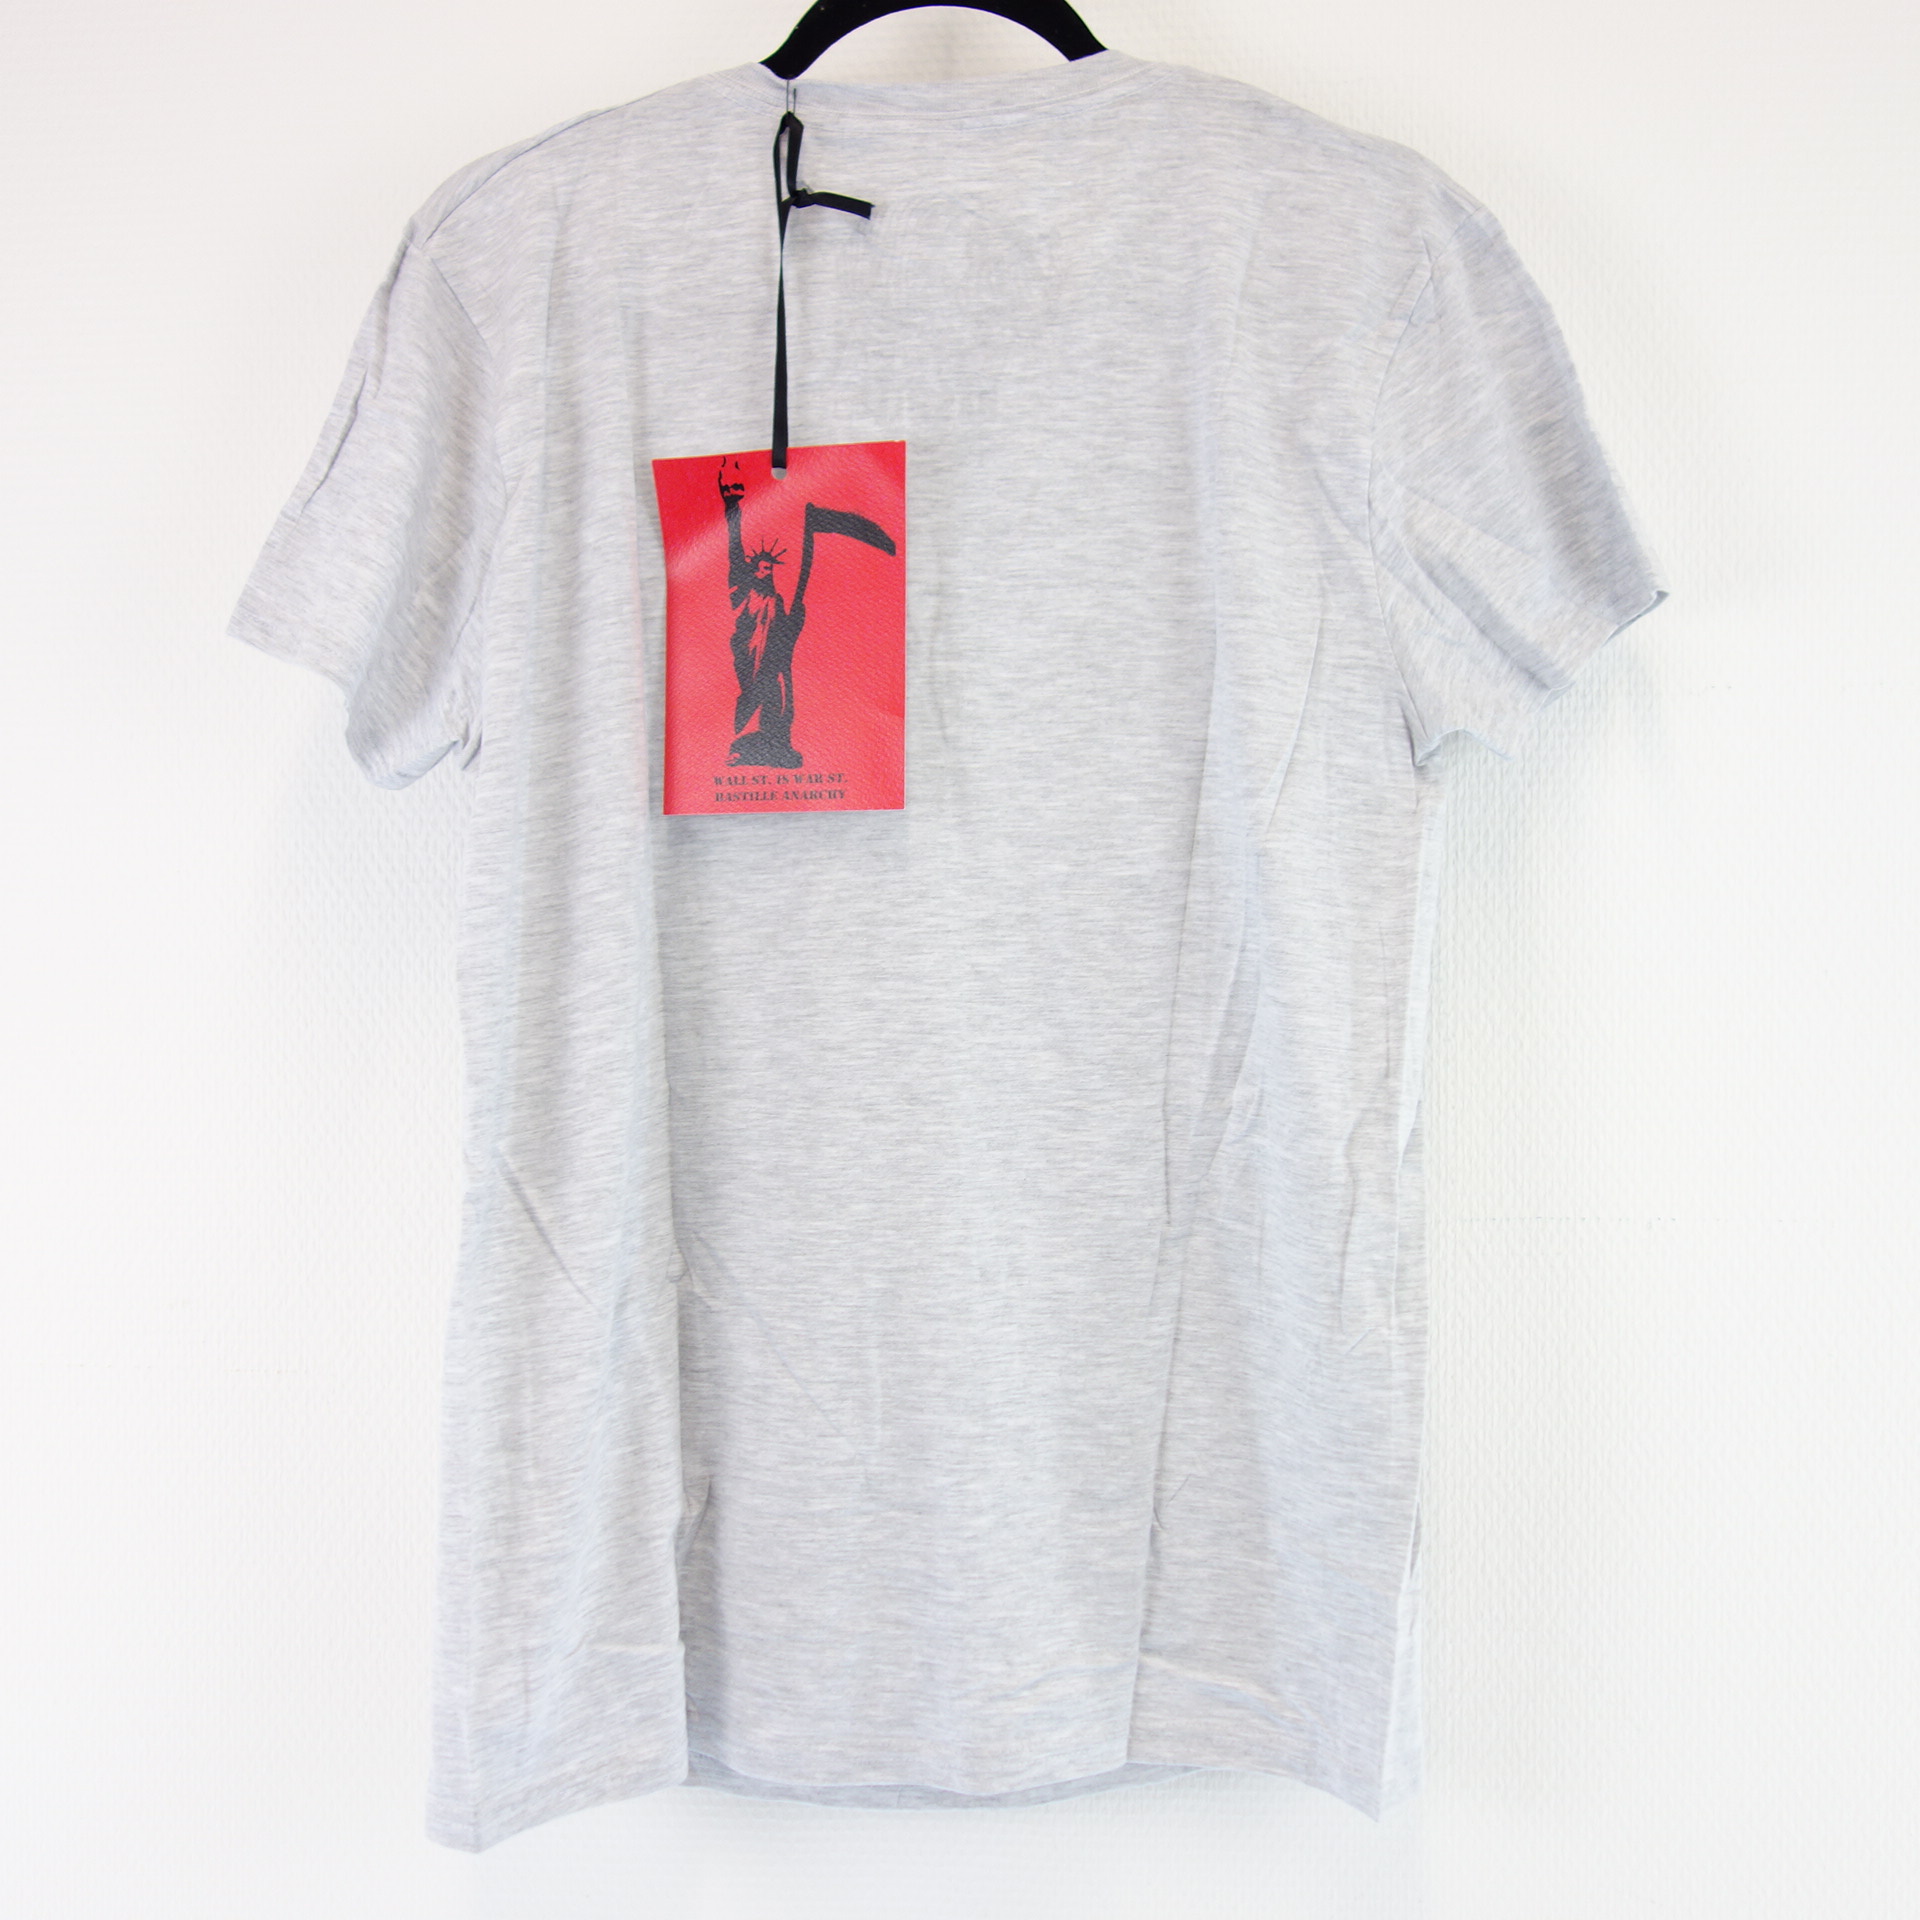 BASTILLE Venezia Herren T Shirt T-Shirt Herrenshirt Grau Modell Tokyo Baumwolle Print